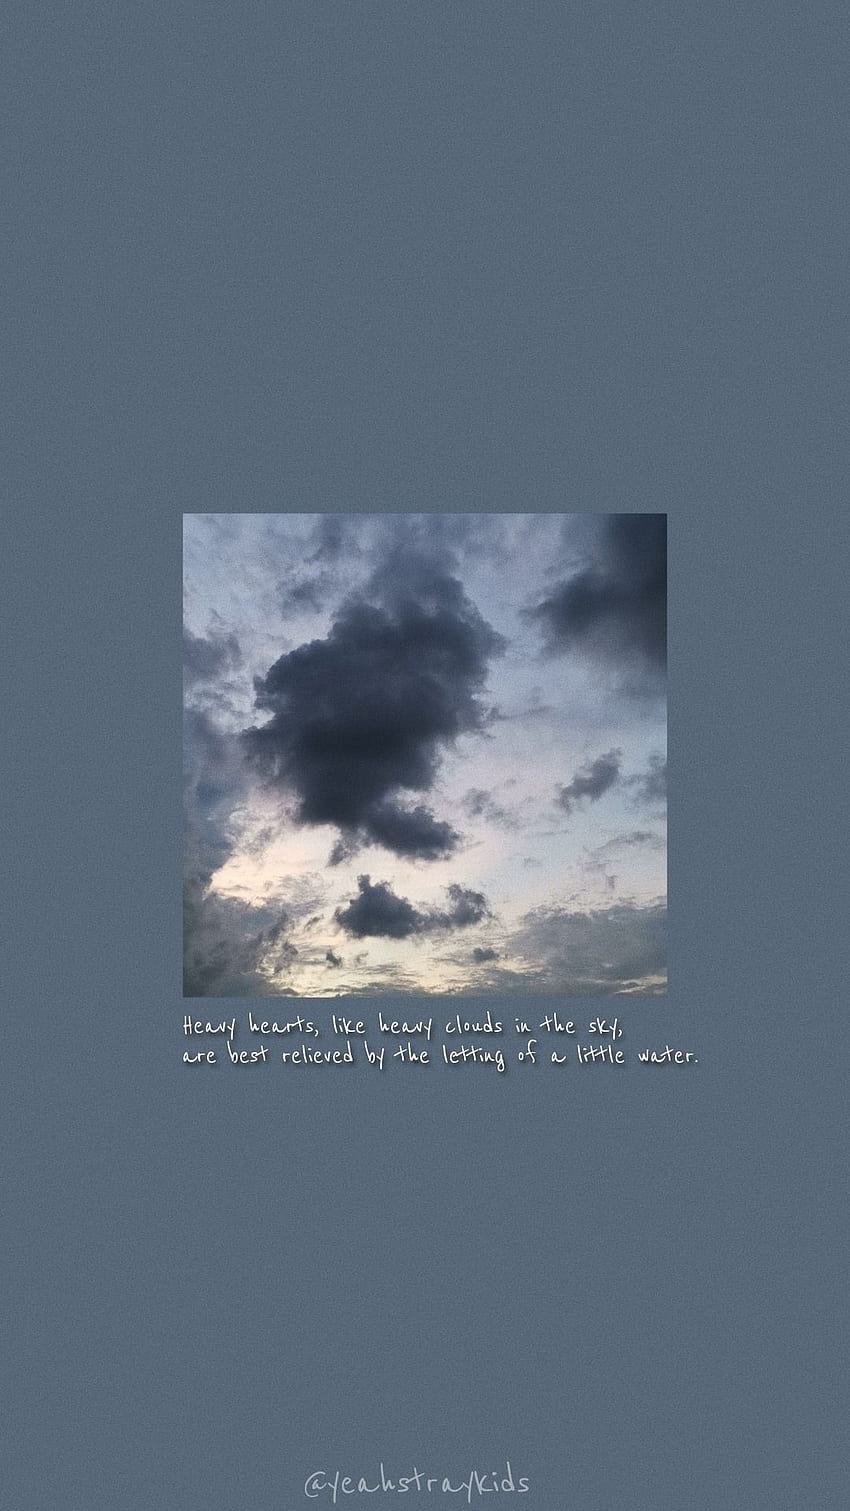 A cloudy sky with the words of an author - School, sky